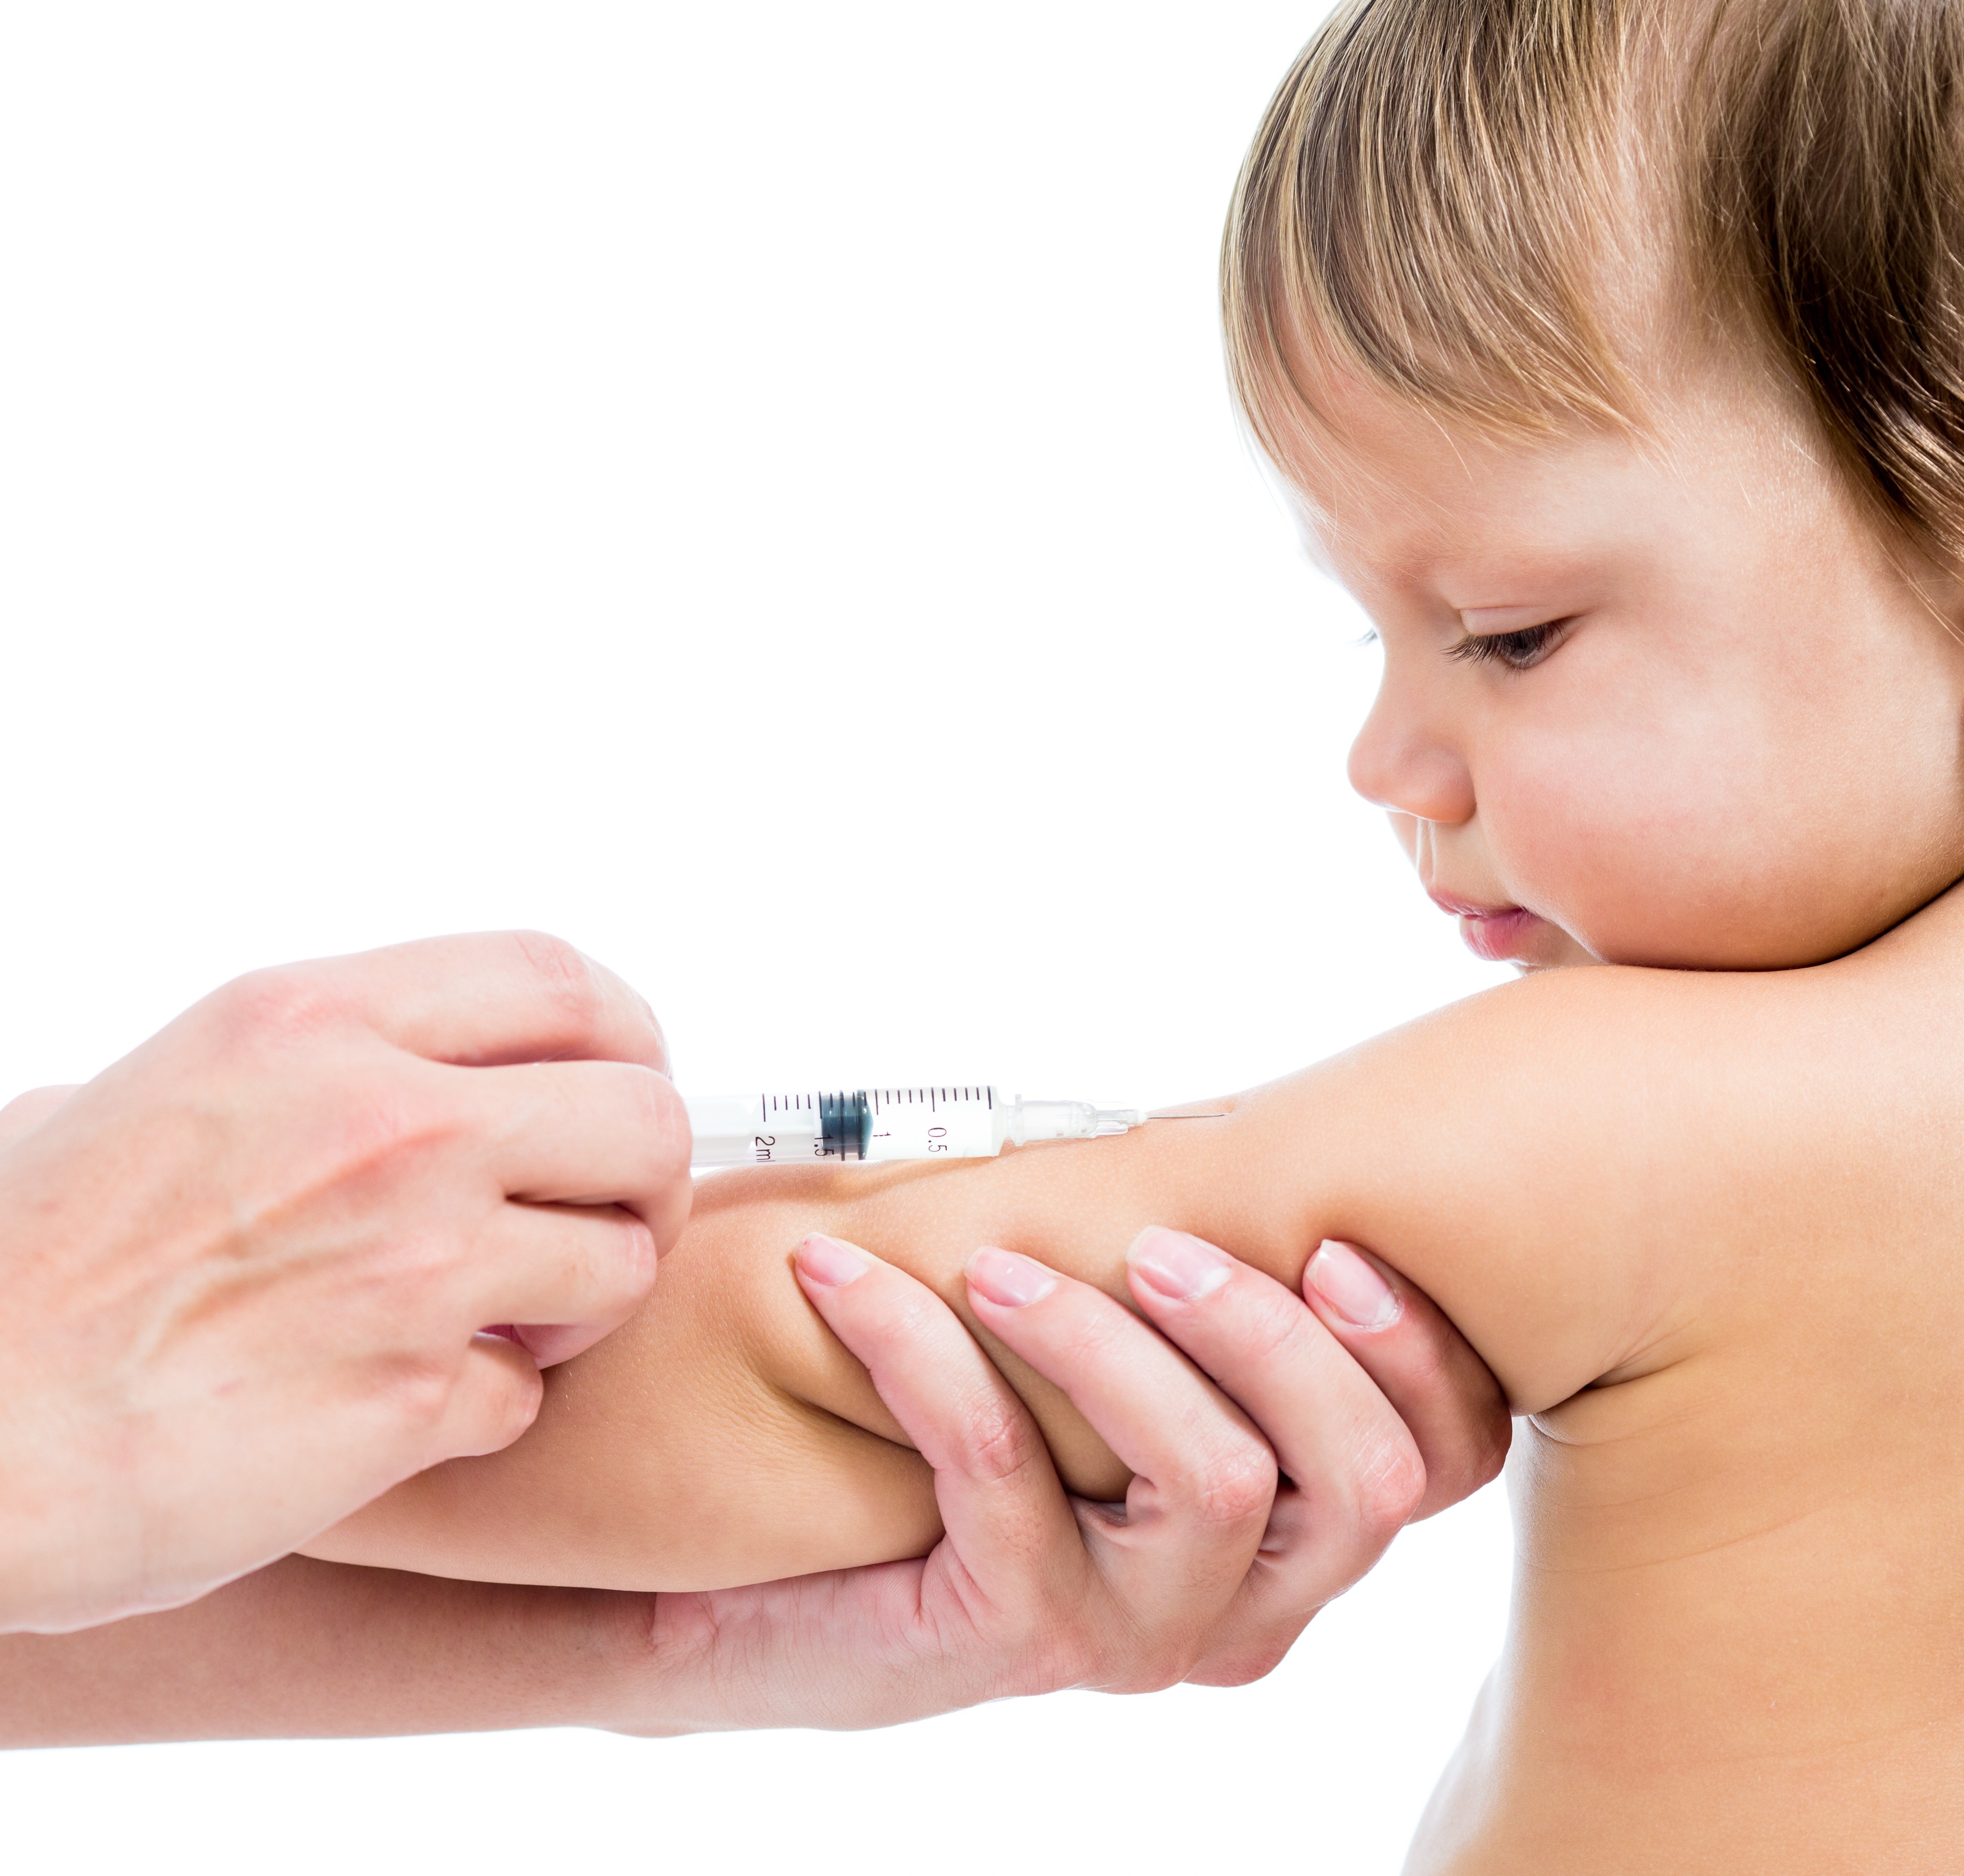 vacina (Foto: Shutterstock)